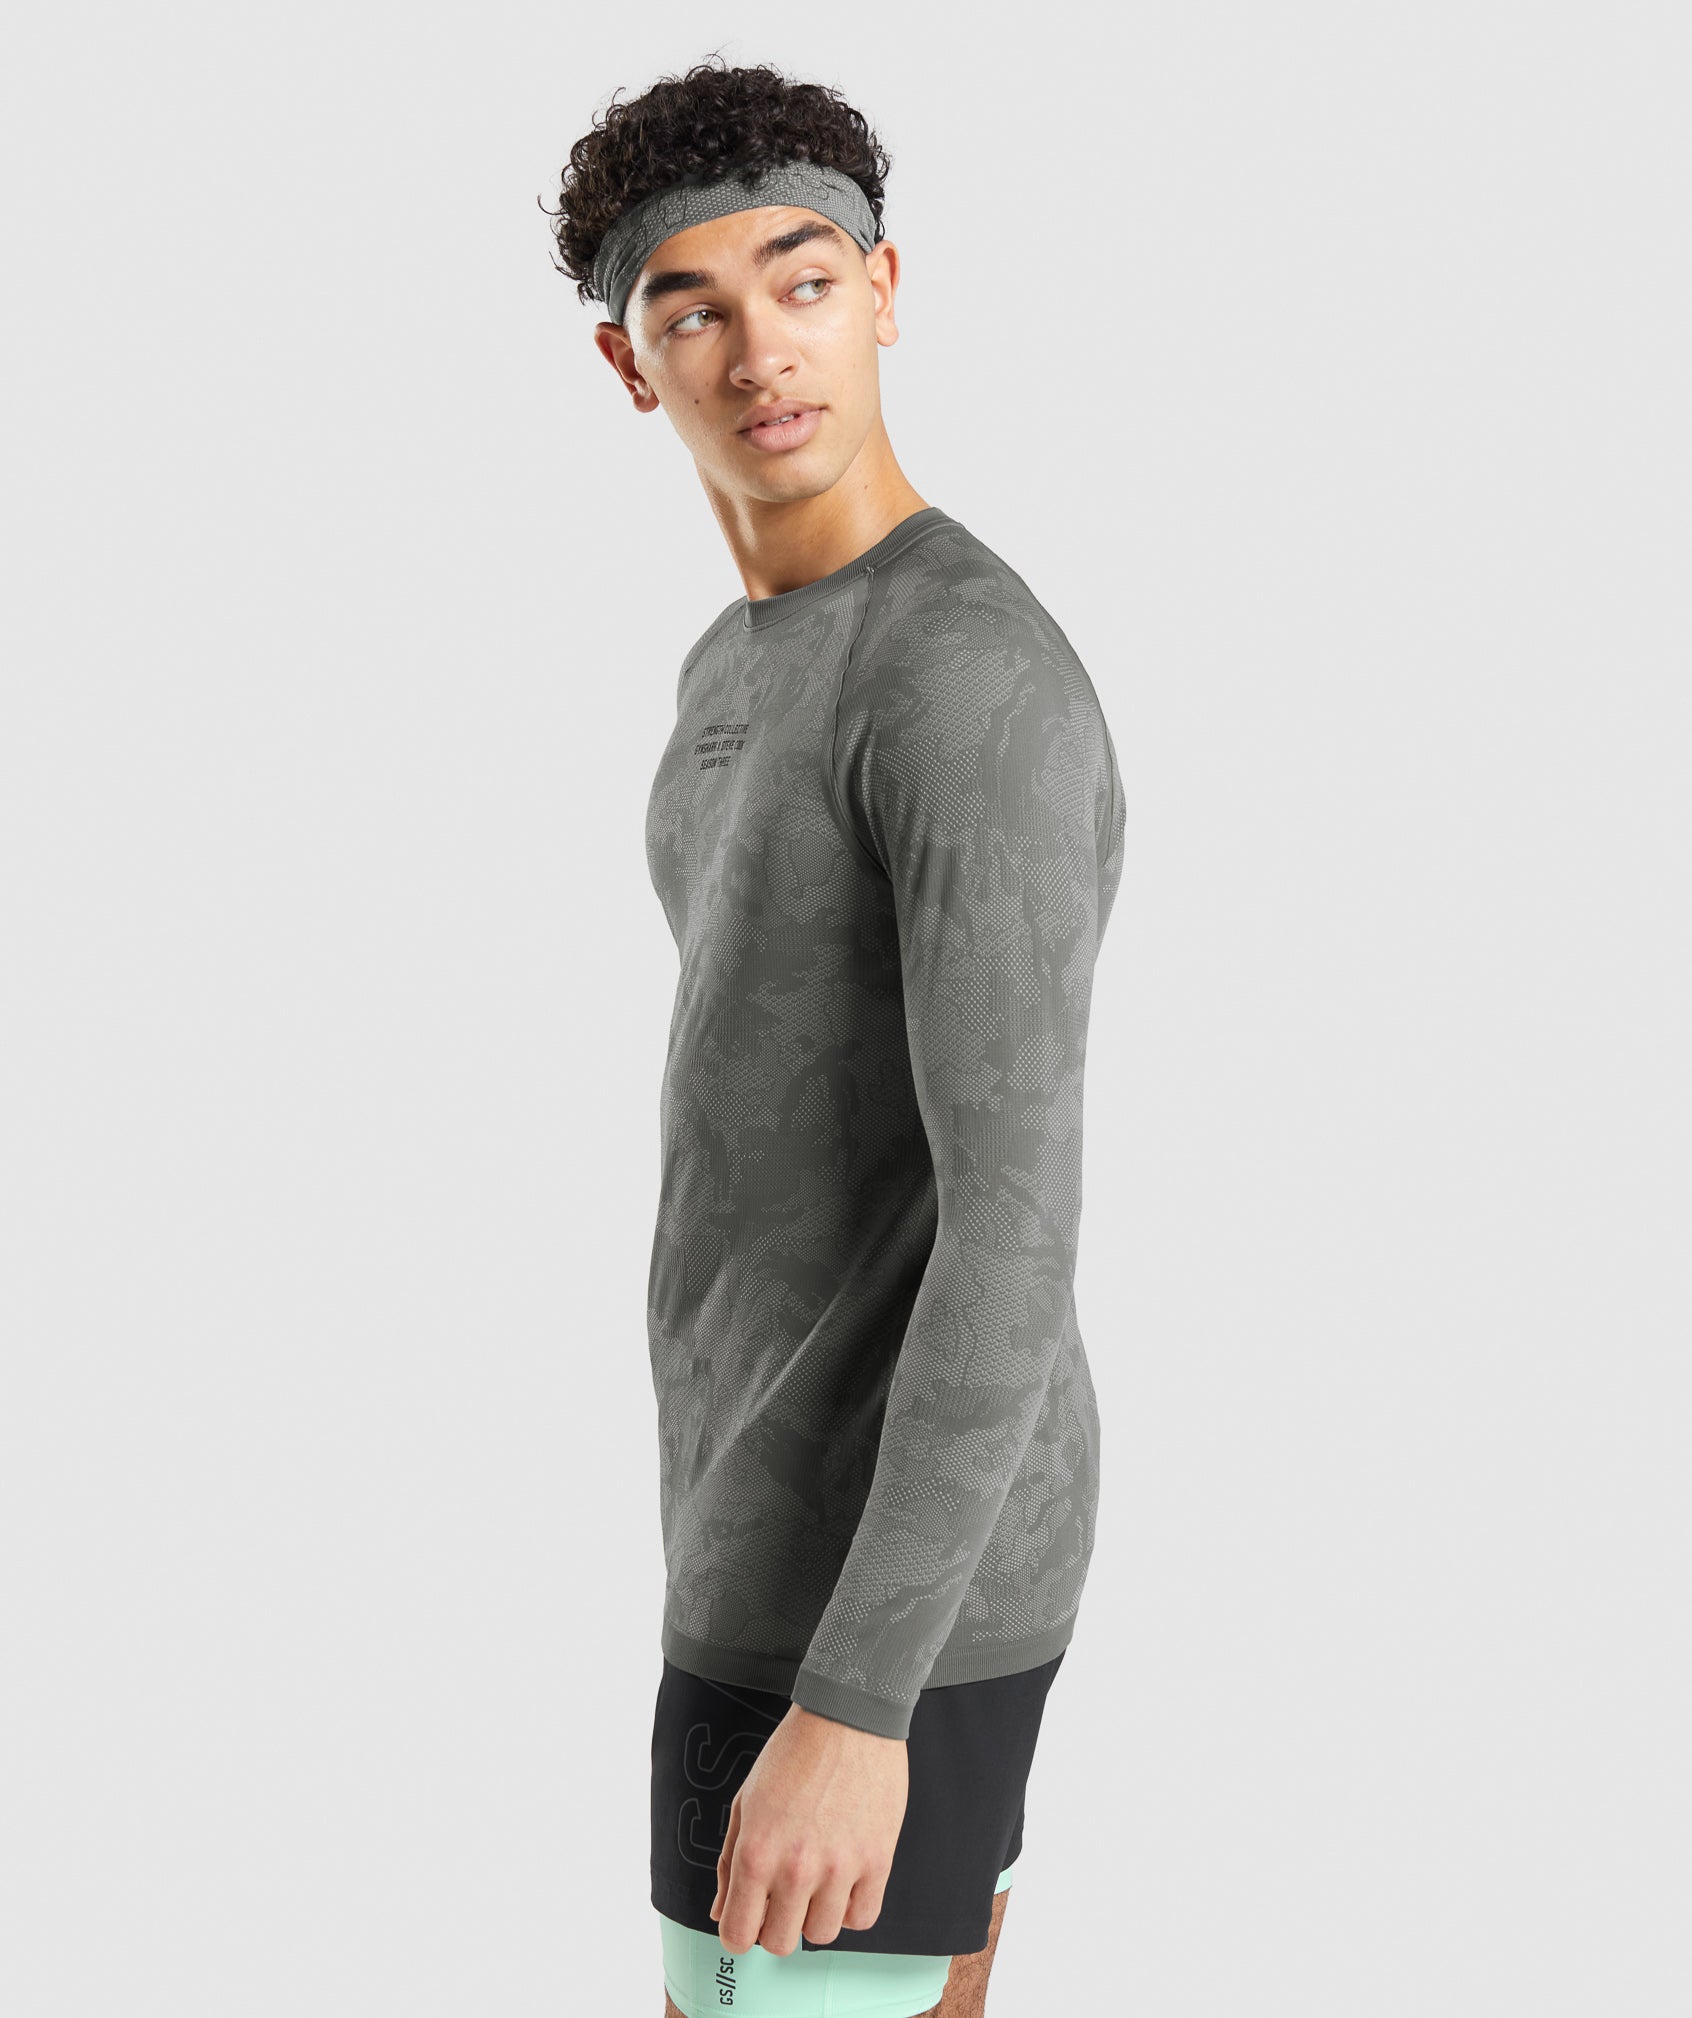 Gymshark//Steve Cook Long Sleeve Seamless T-Shirt in Charcoal Grey/Smokey Grey - view 3